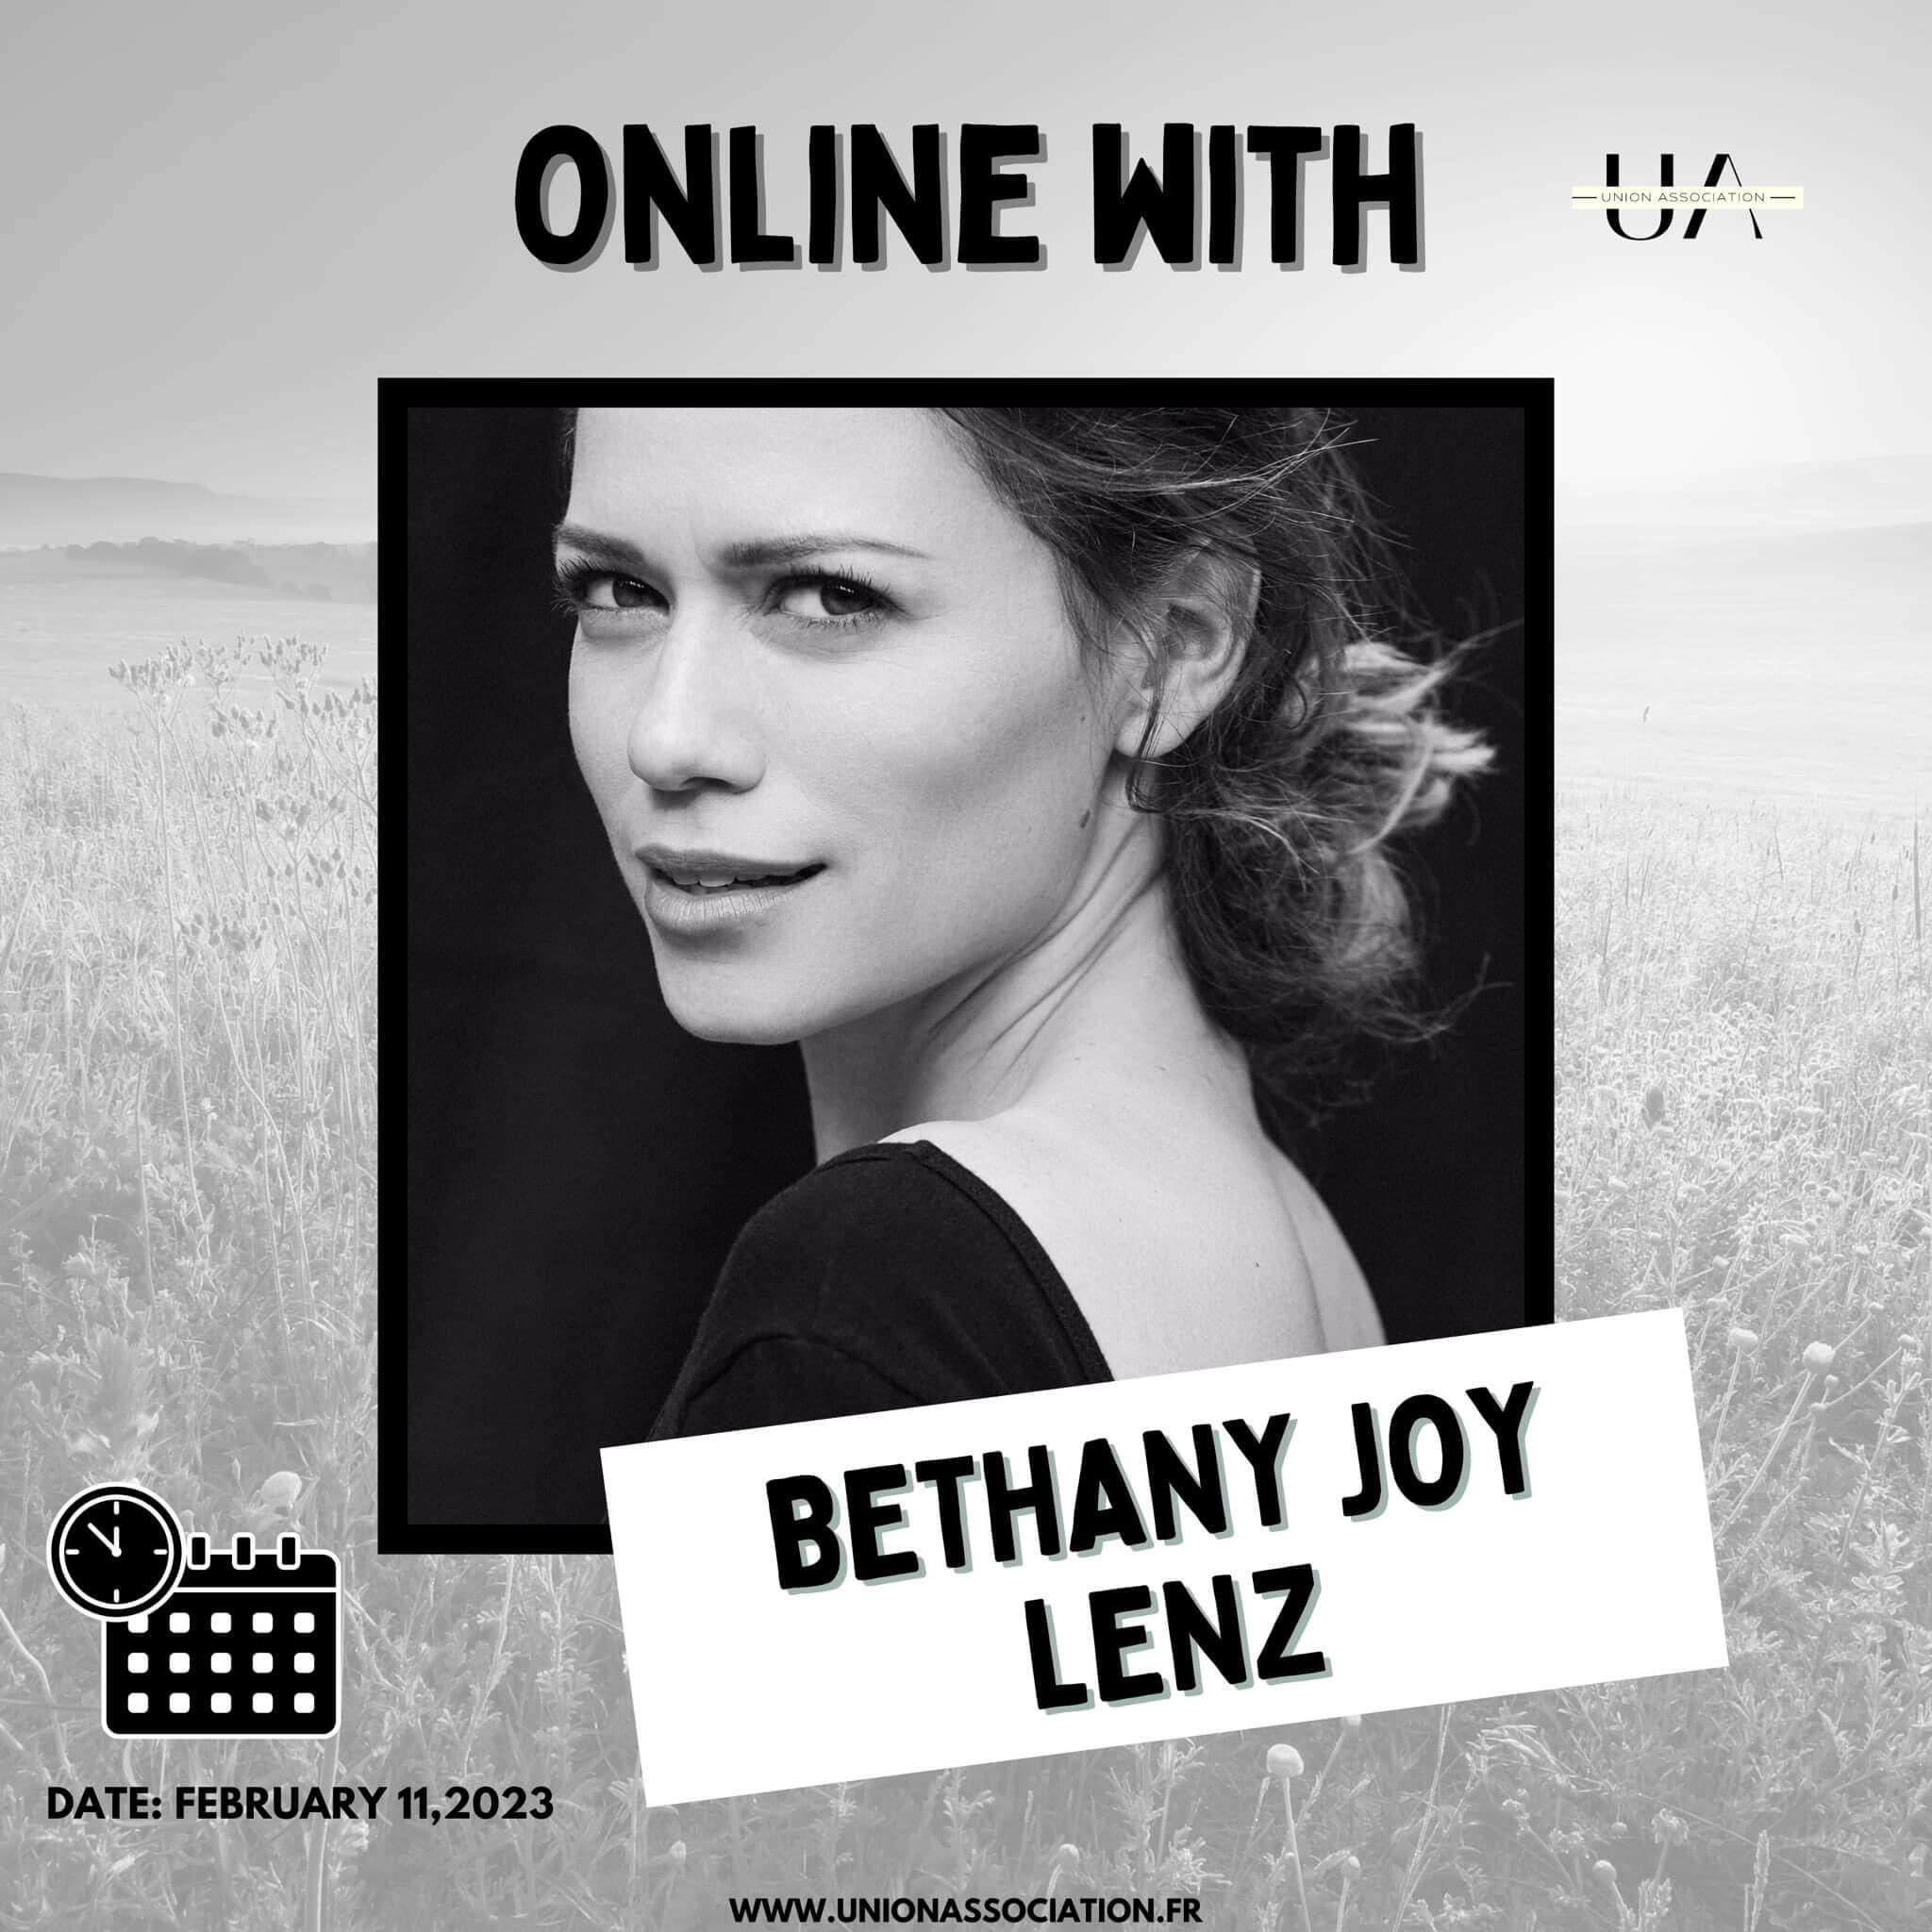 Online with Bethany Joy Lenz